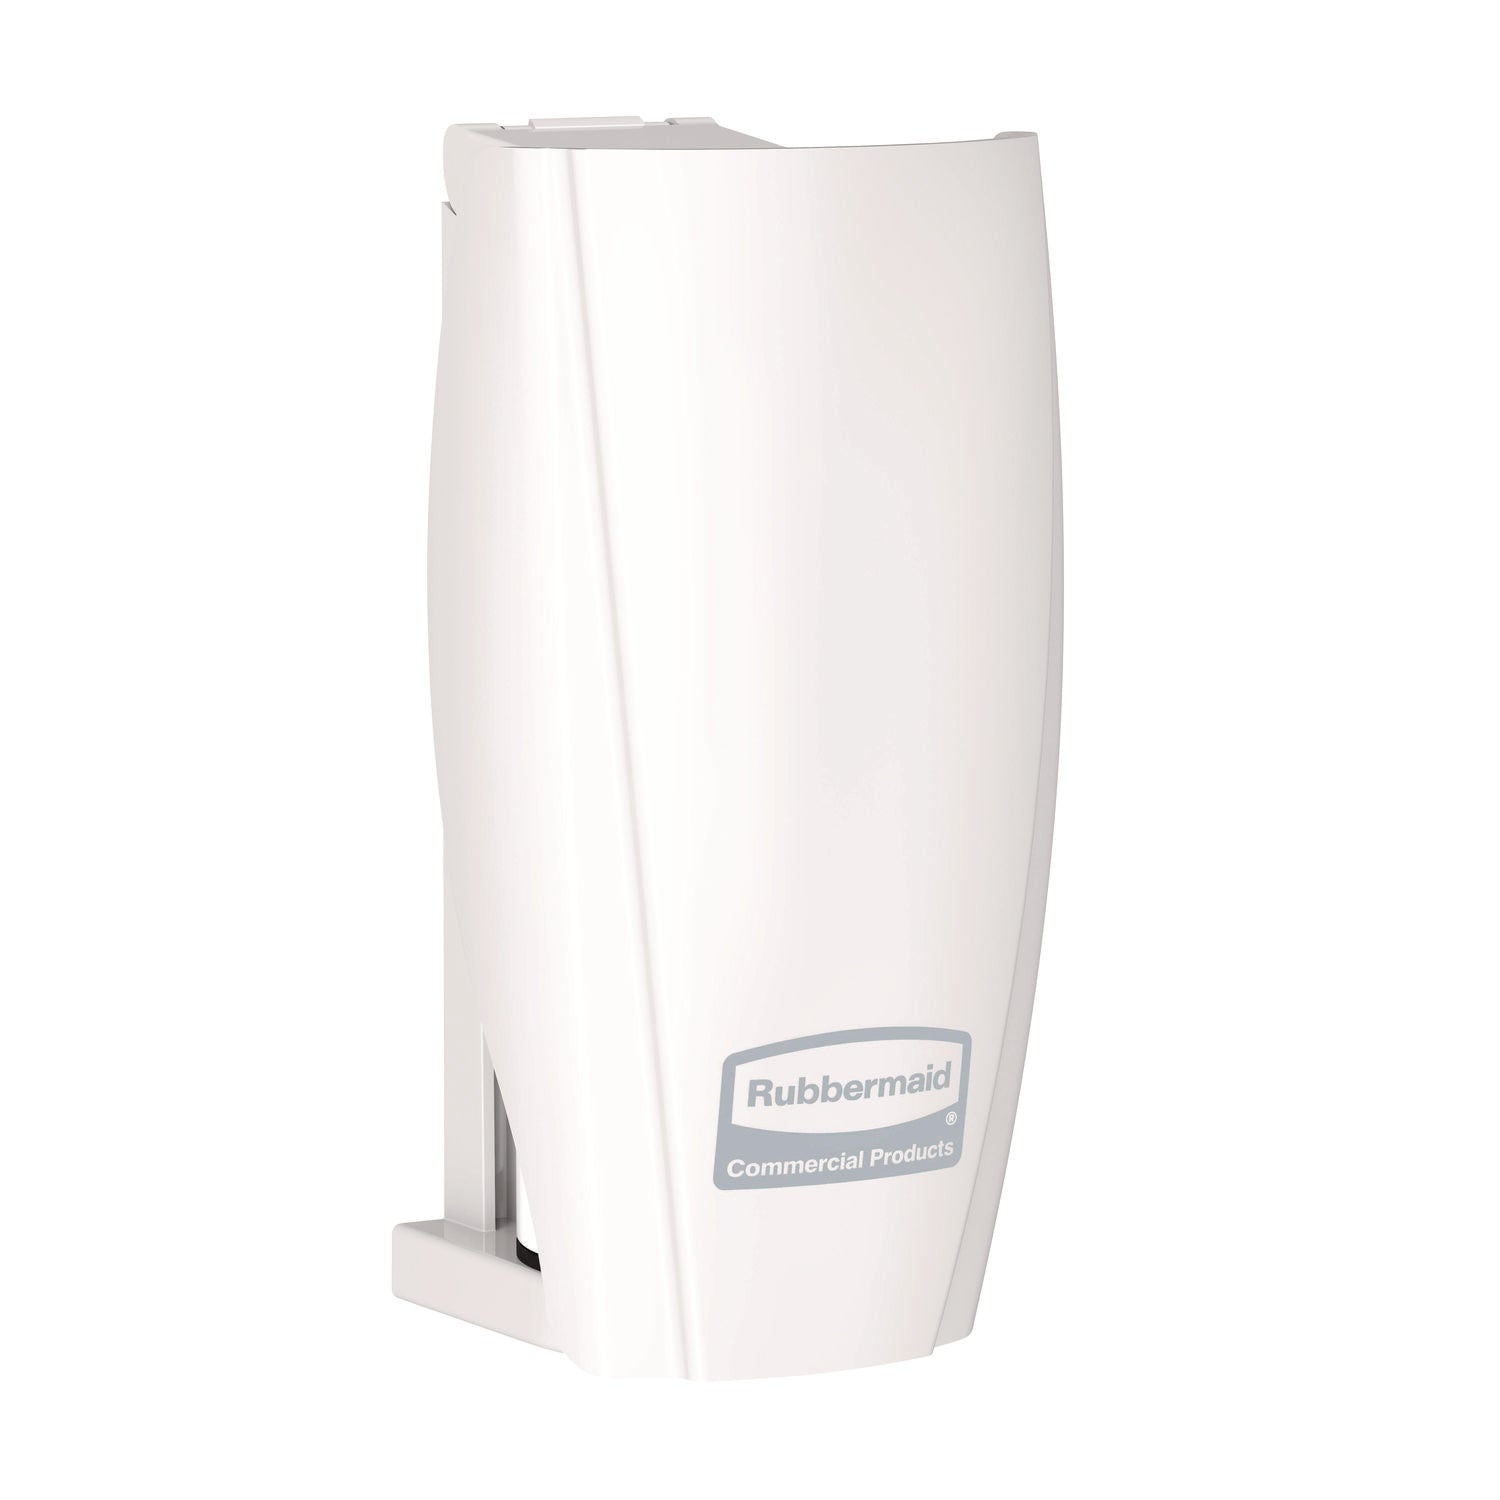 TC TCell Odor Control Dispenser, 2.75" x 2.5" x 5.25", White - 2